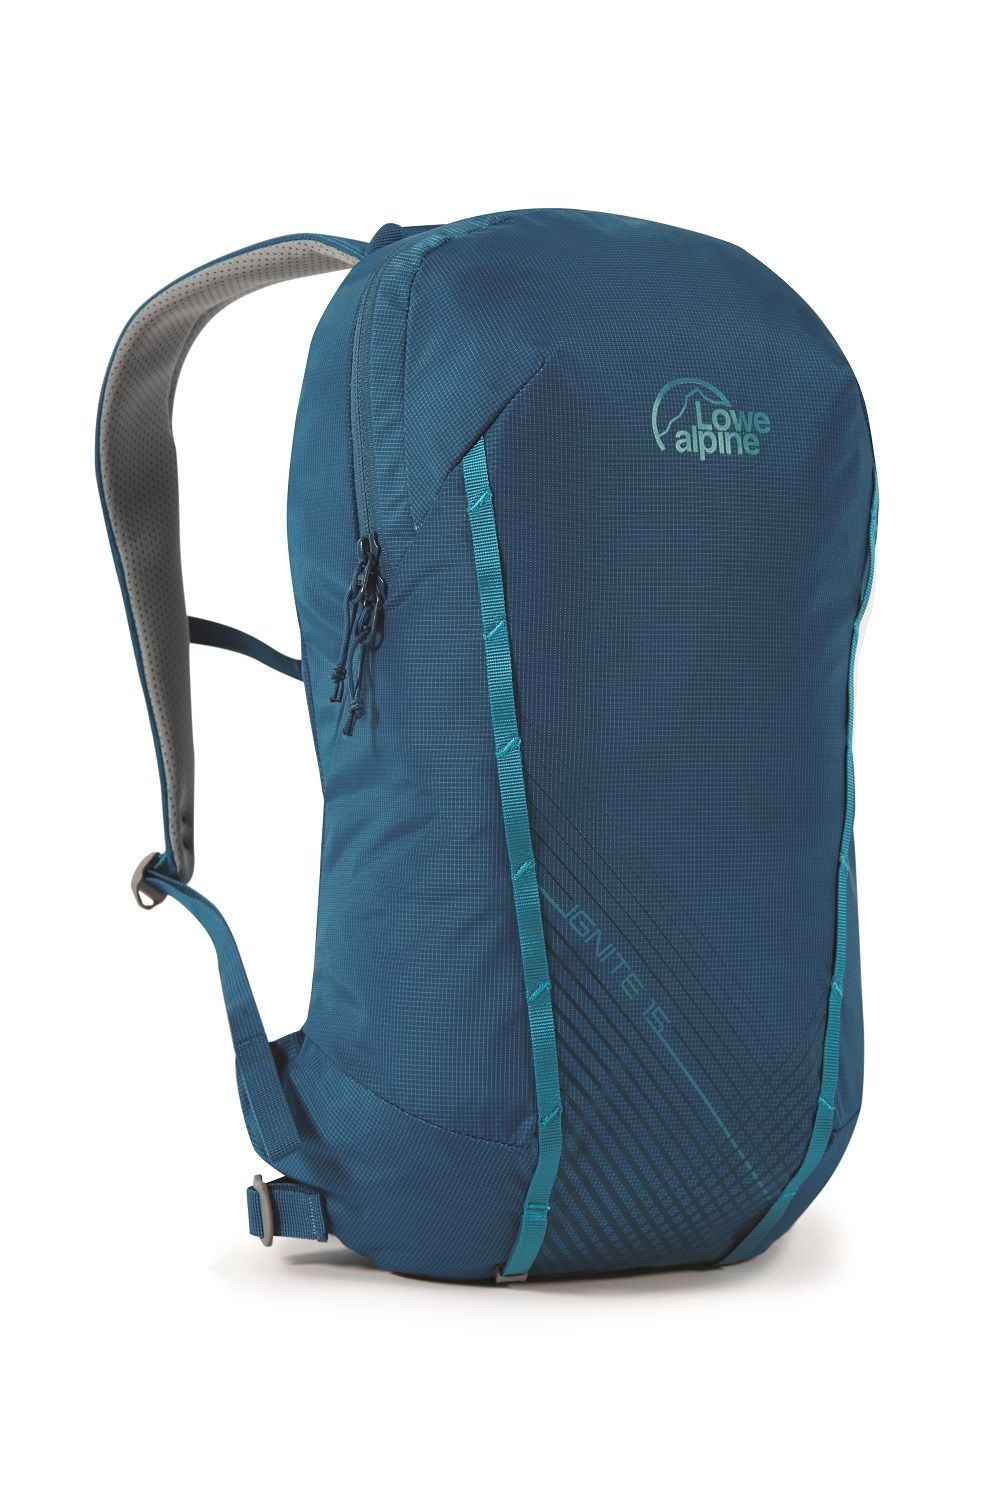 Lowe Alpine Ignite 15 Litre Backpack